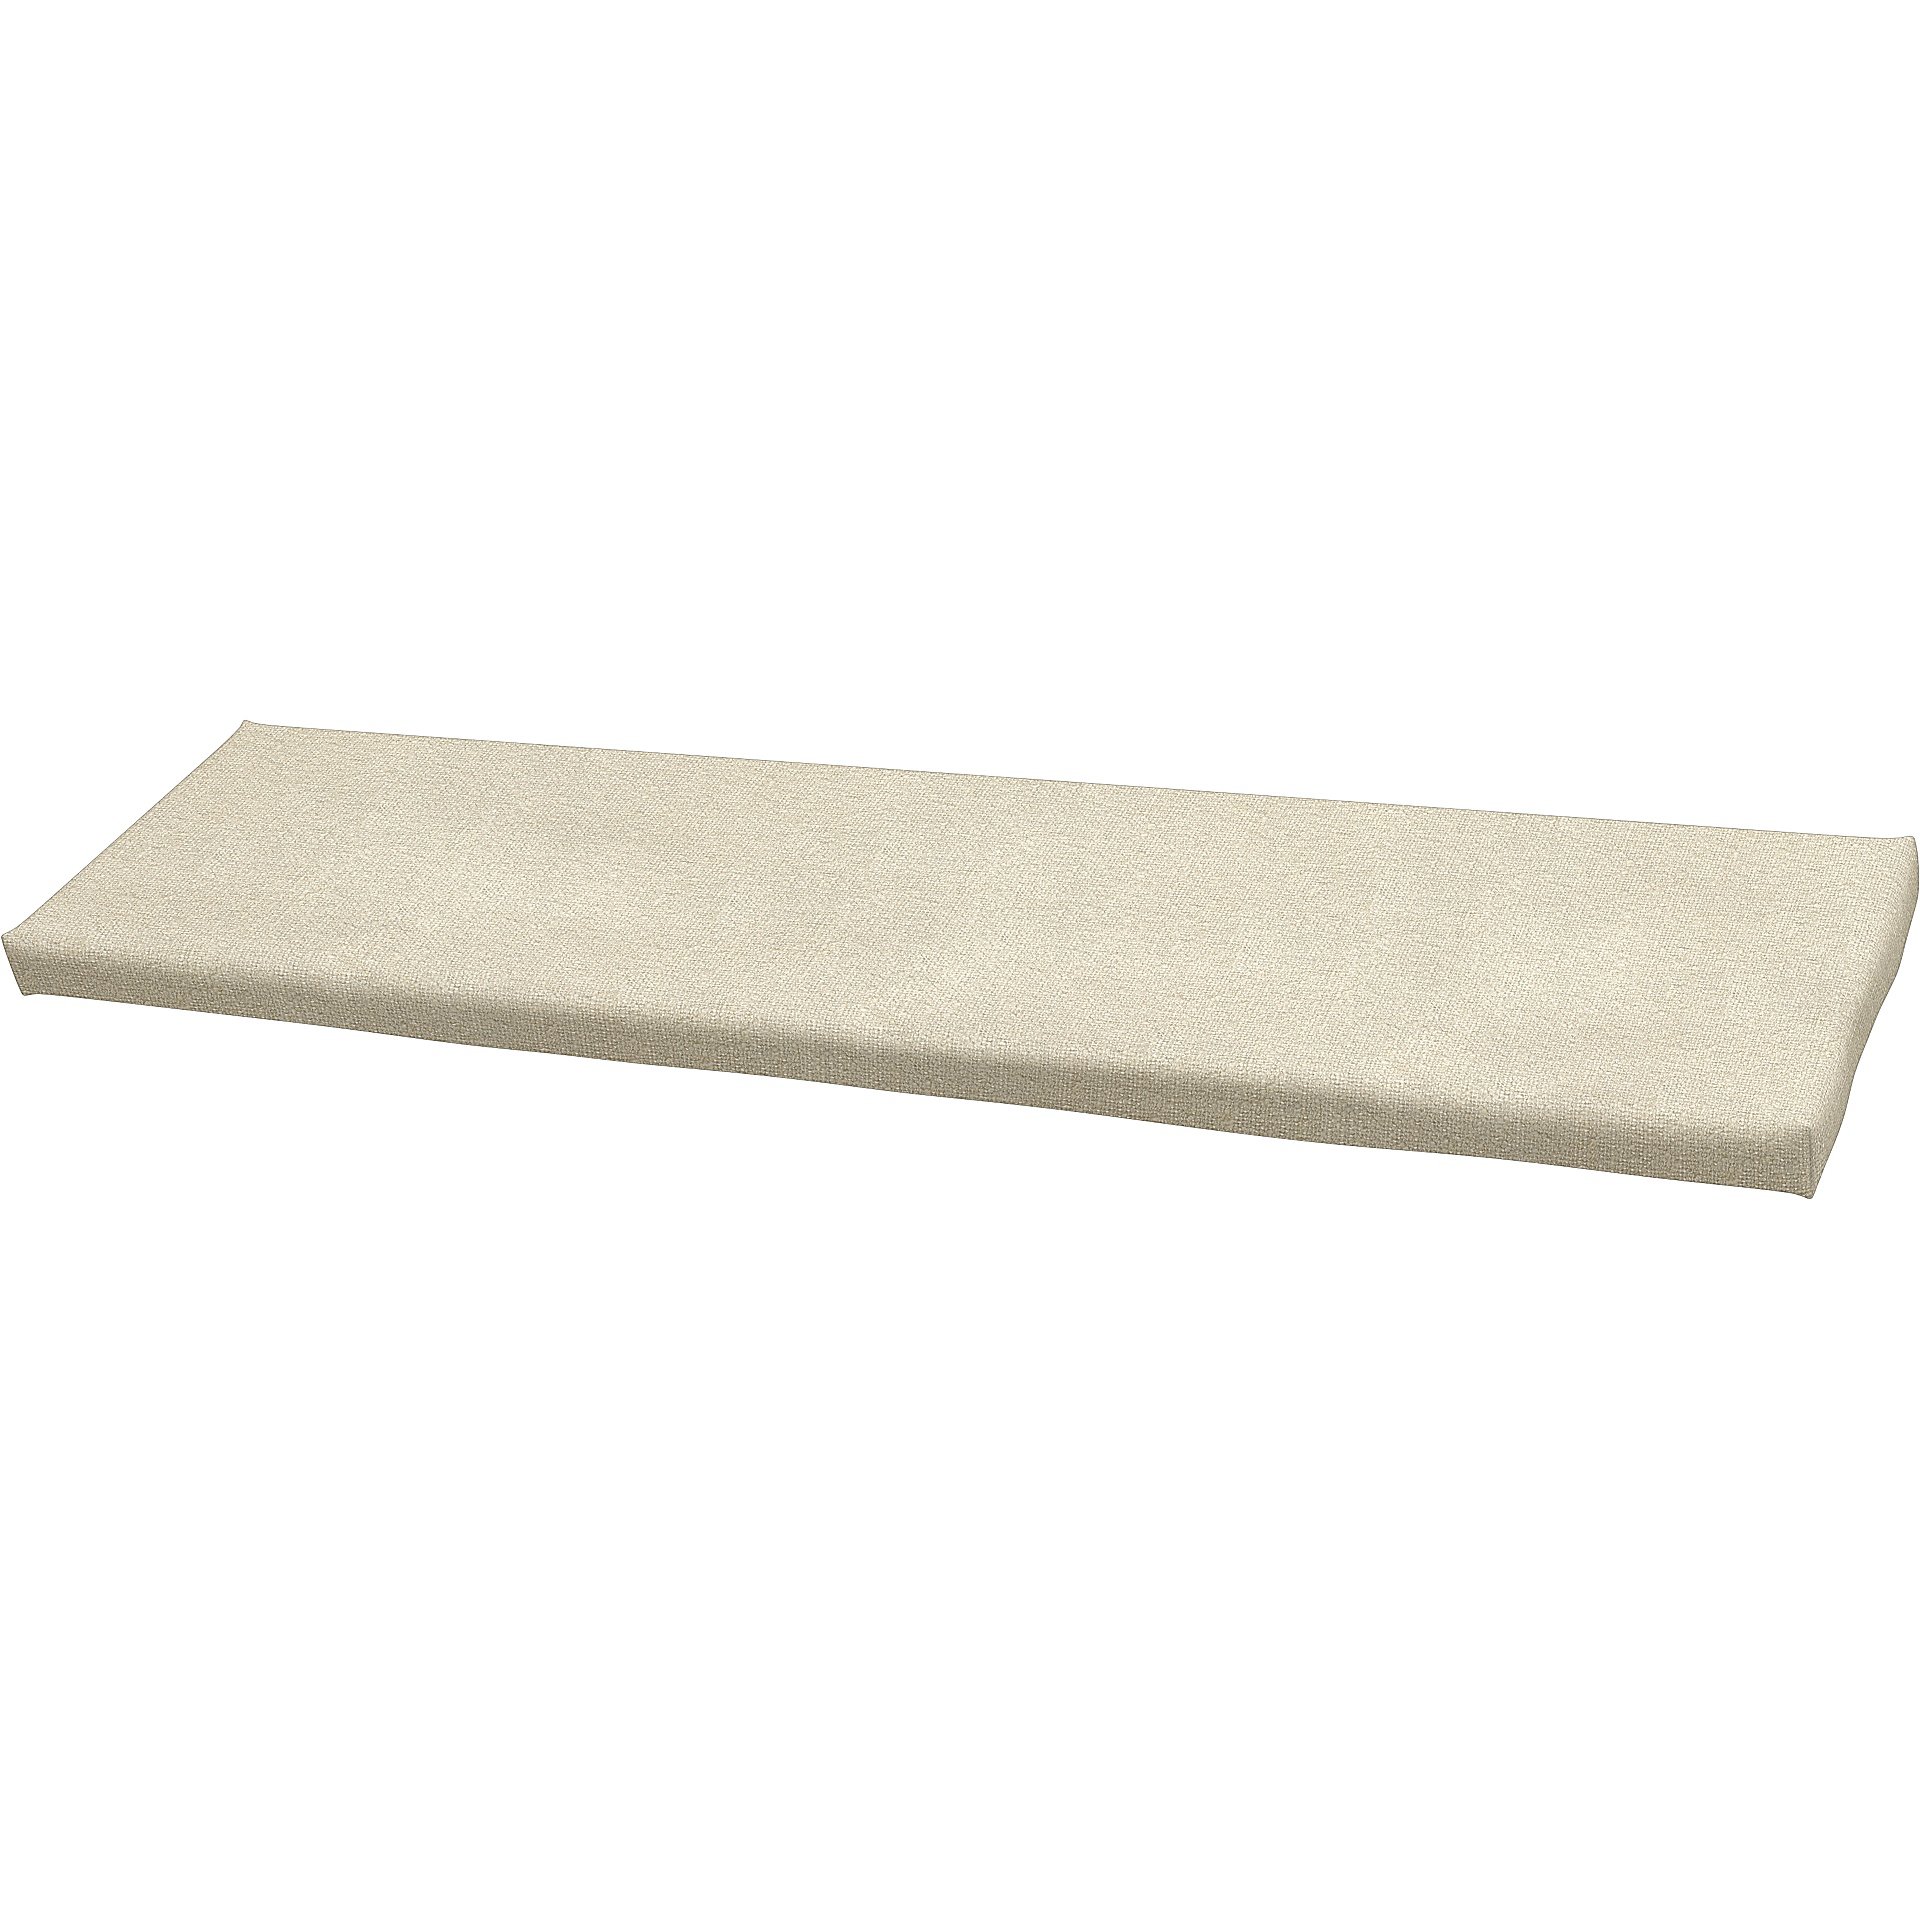 IKEA - Universal bench cushion cover 120x35x3,5 cm, Cream, Boucle & Texture - Bemz